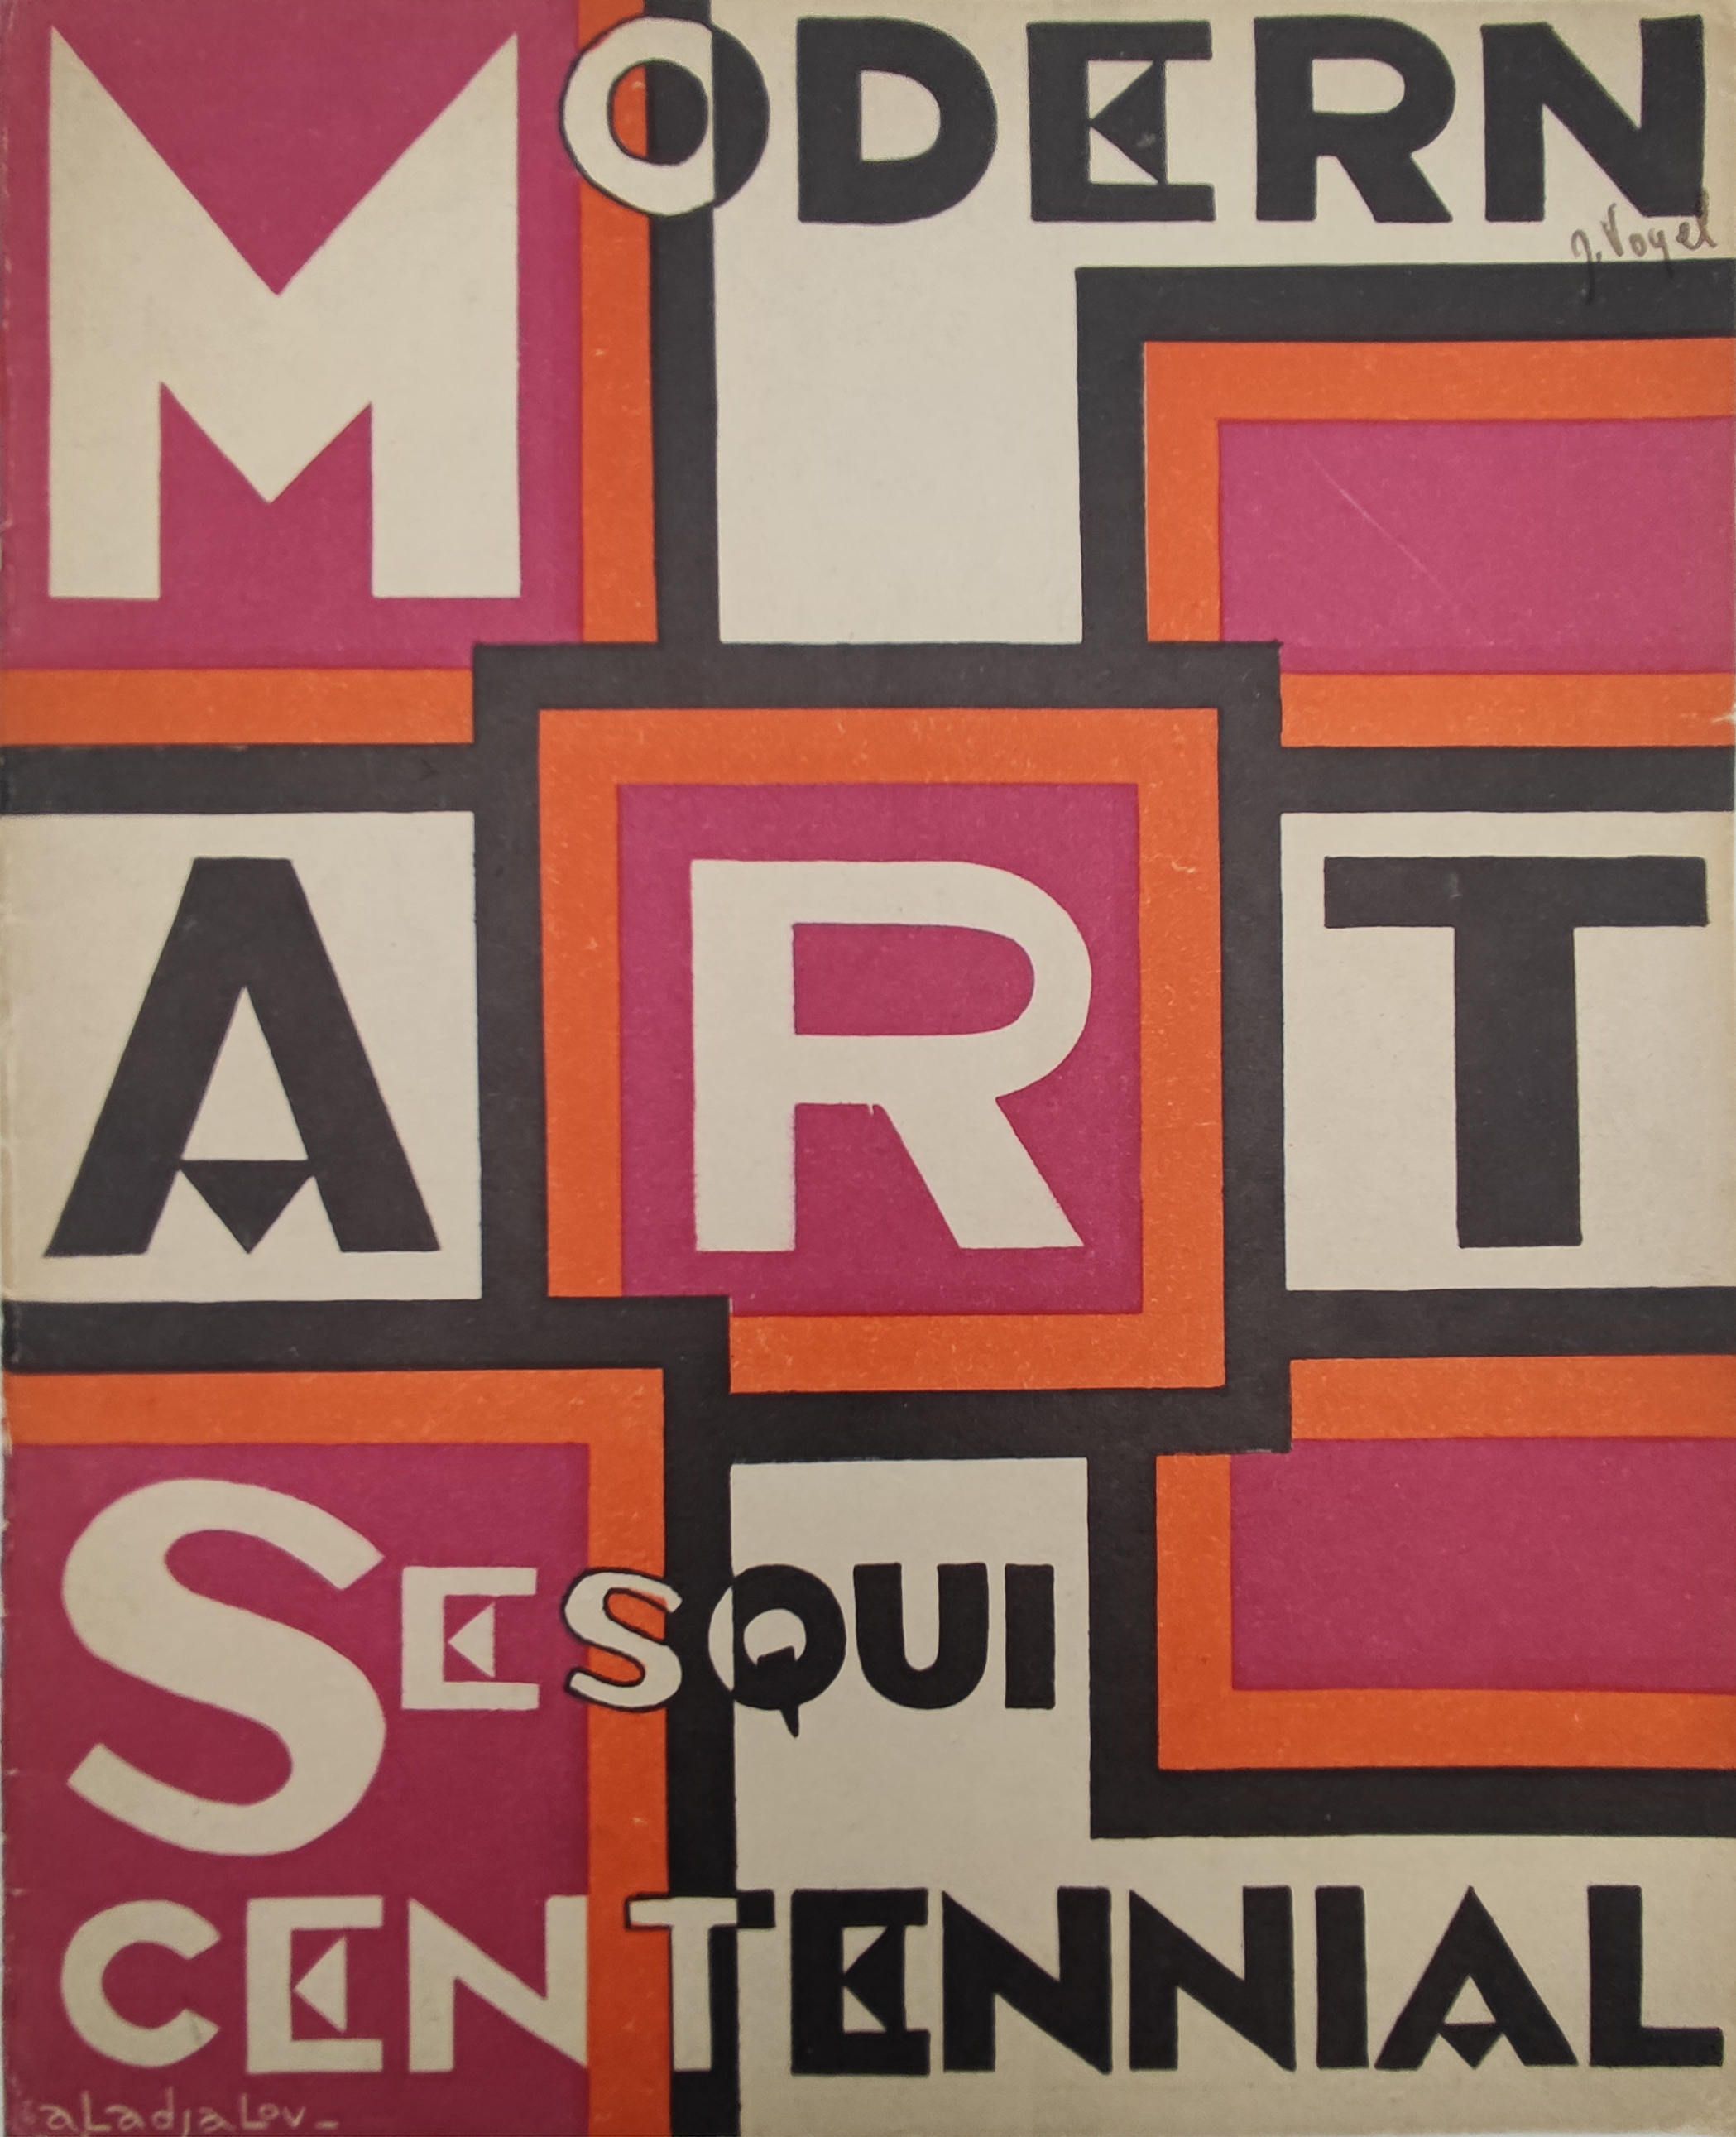 Modern Art at the Sesqui-centennial exhibition. New York, 1926. - Verkauft für EUR 1185.-